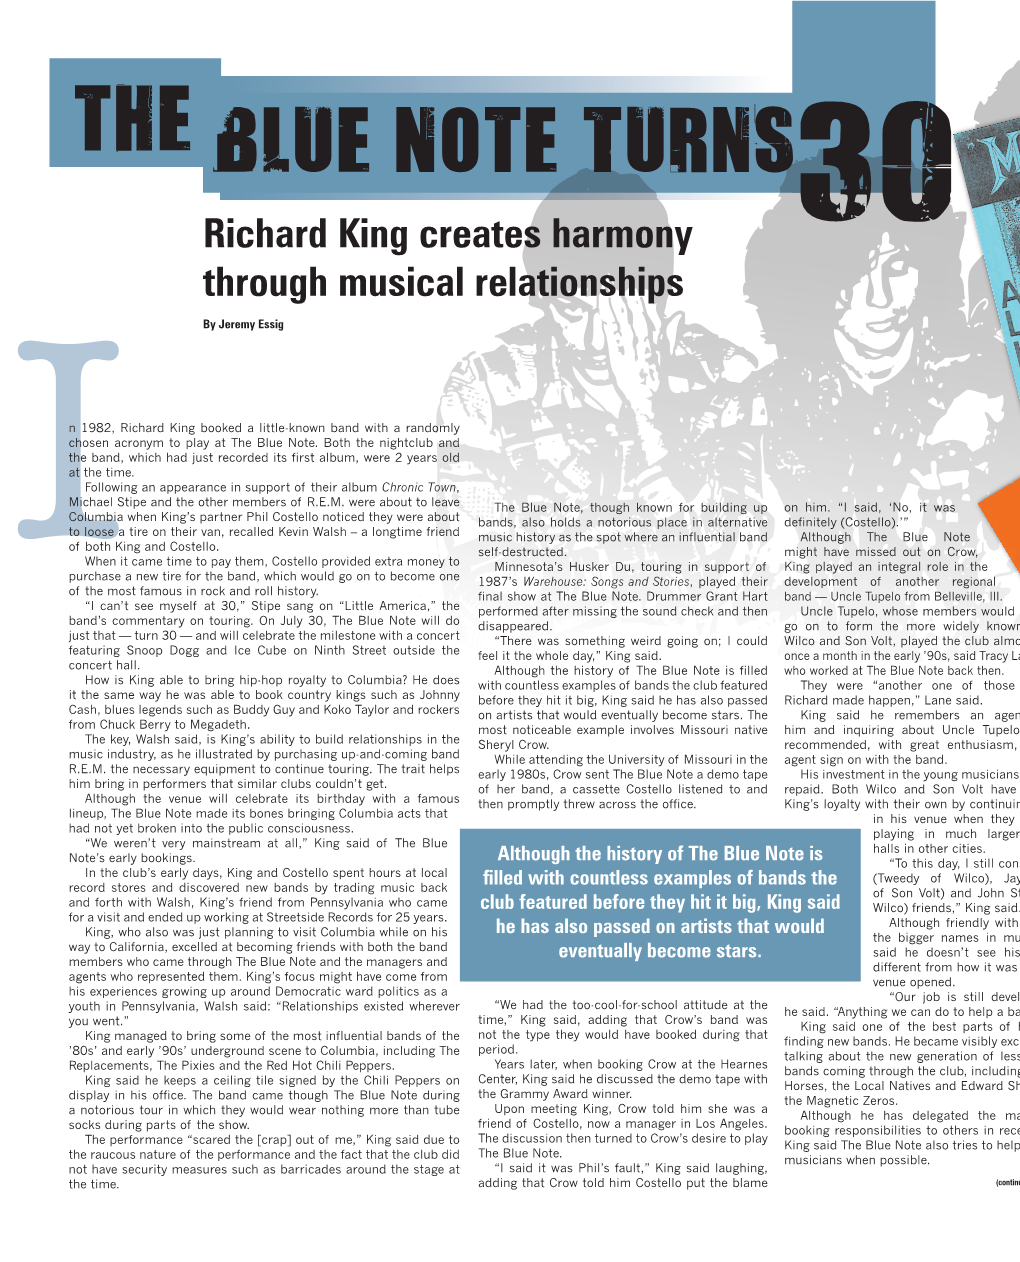 Richard King Creates Harmony Through Musical Relationships